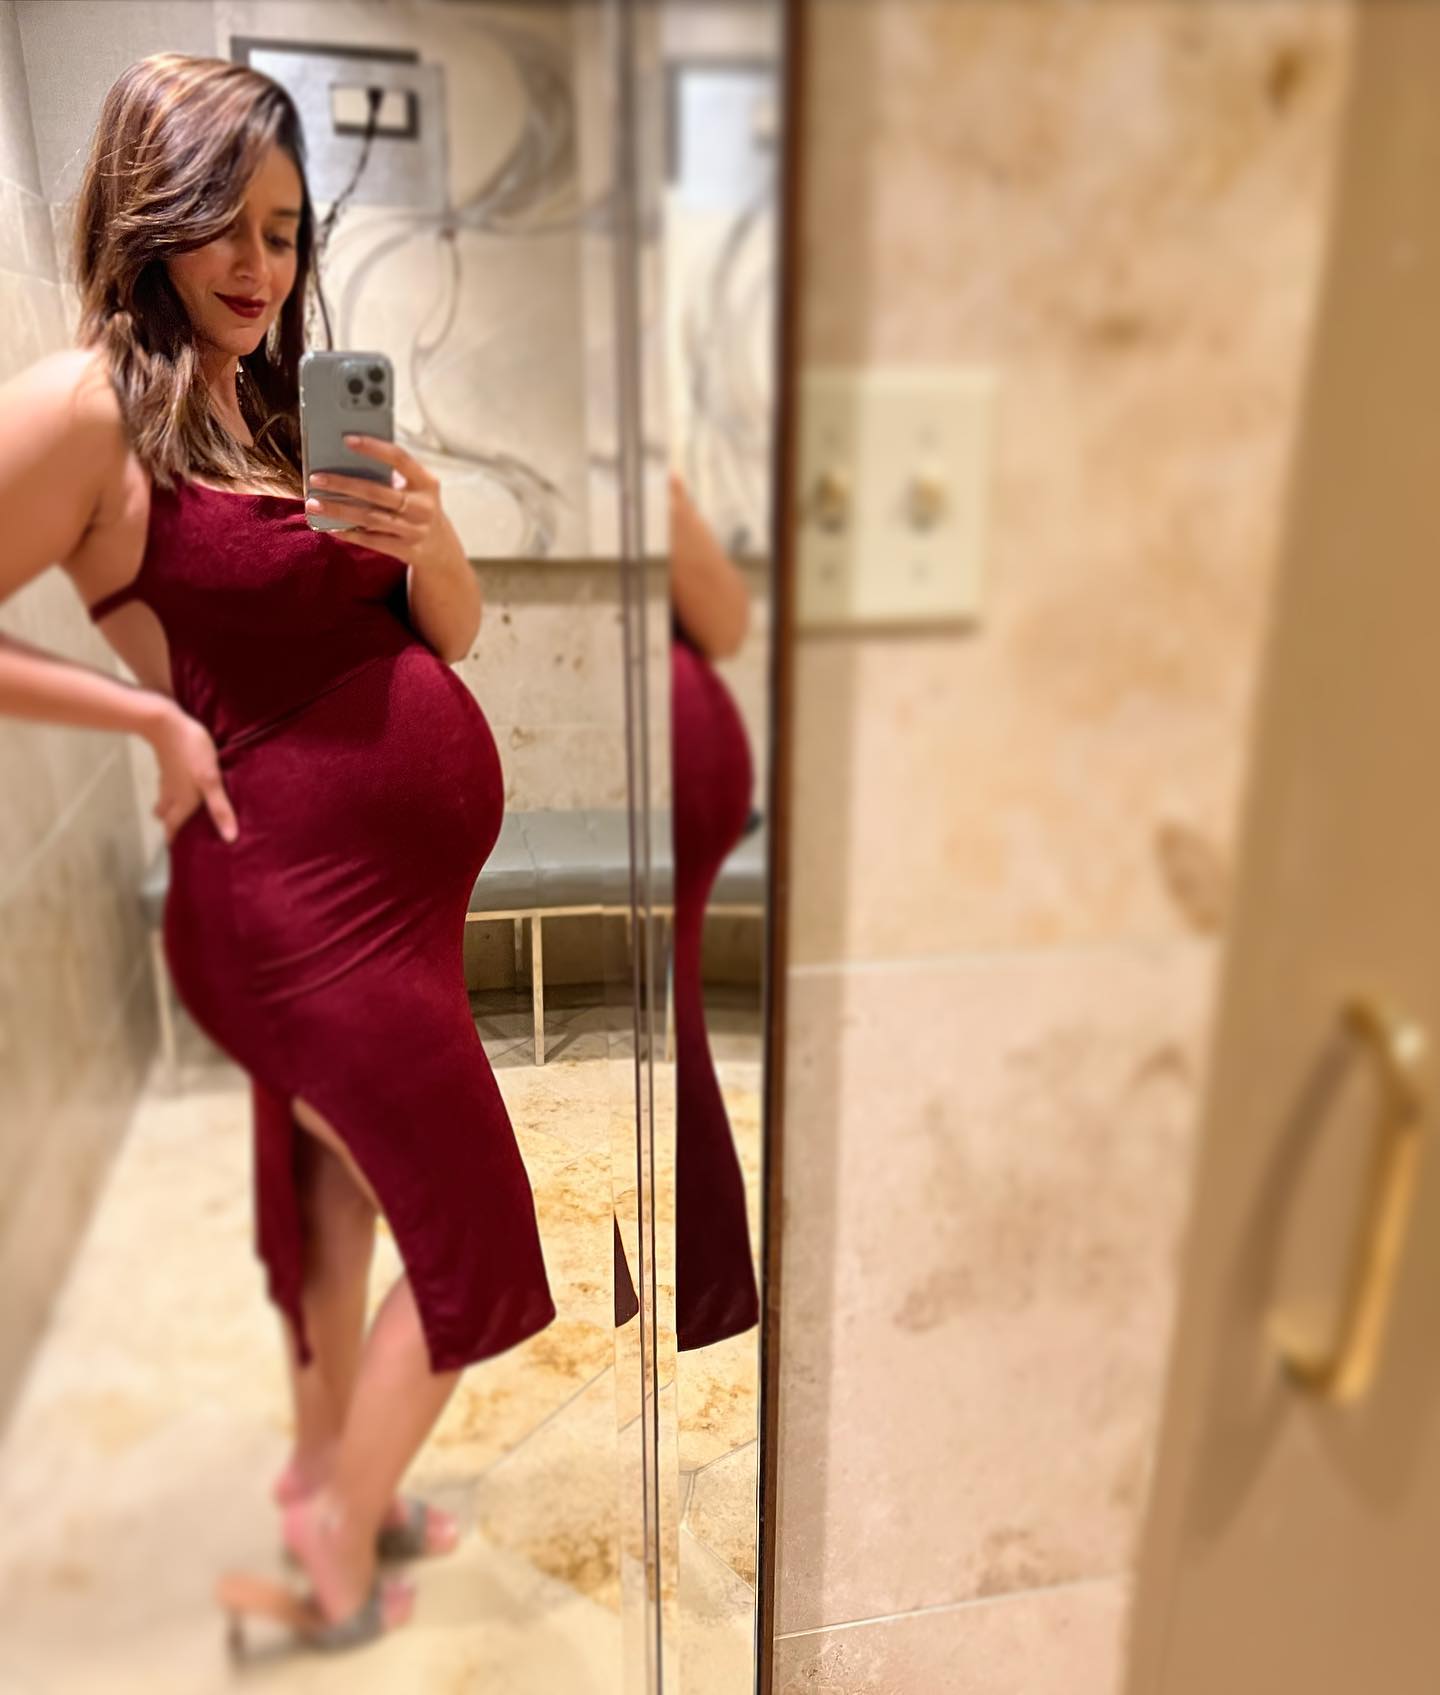 Ileana D'Cruz flaunts her baby bump in stunning red dress